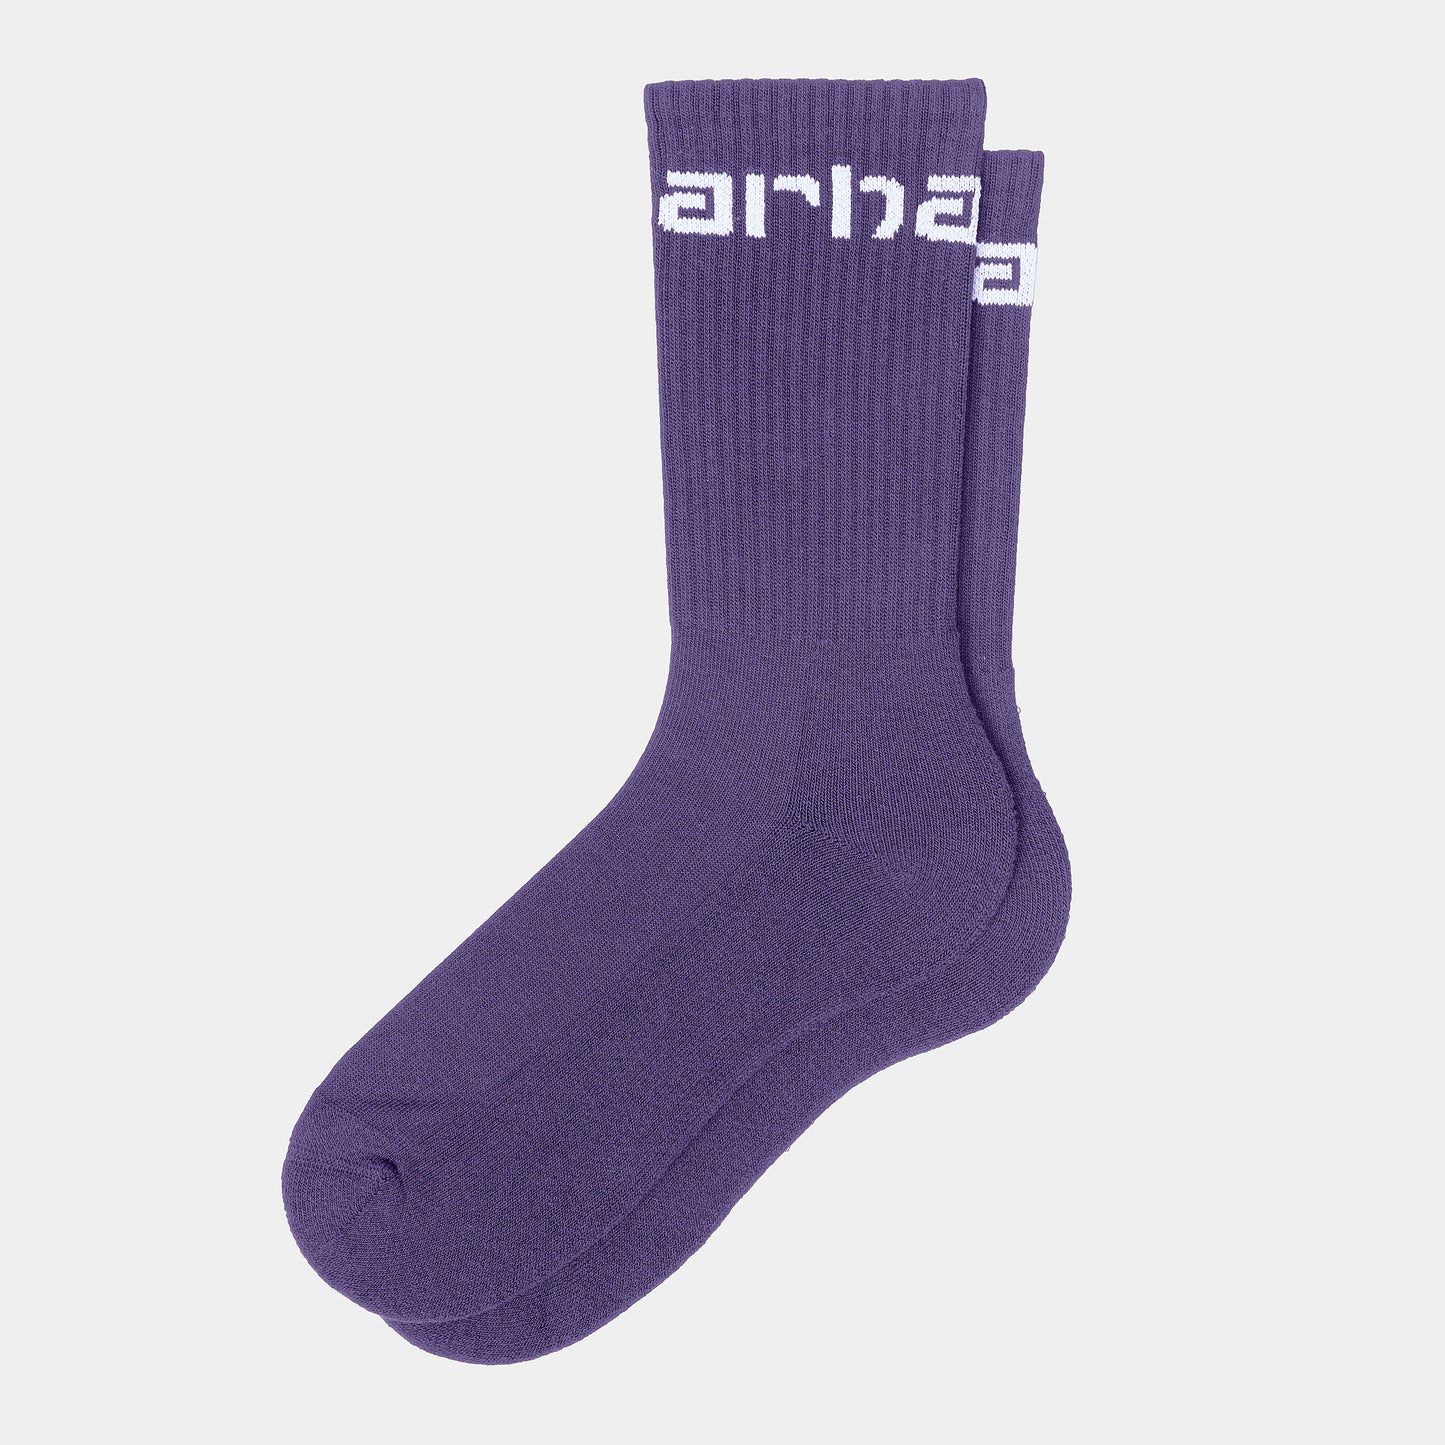 'Carhartt' Socks - Arrenga/White